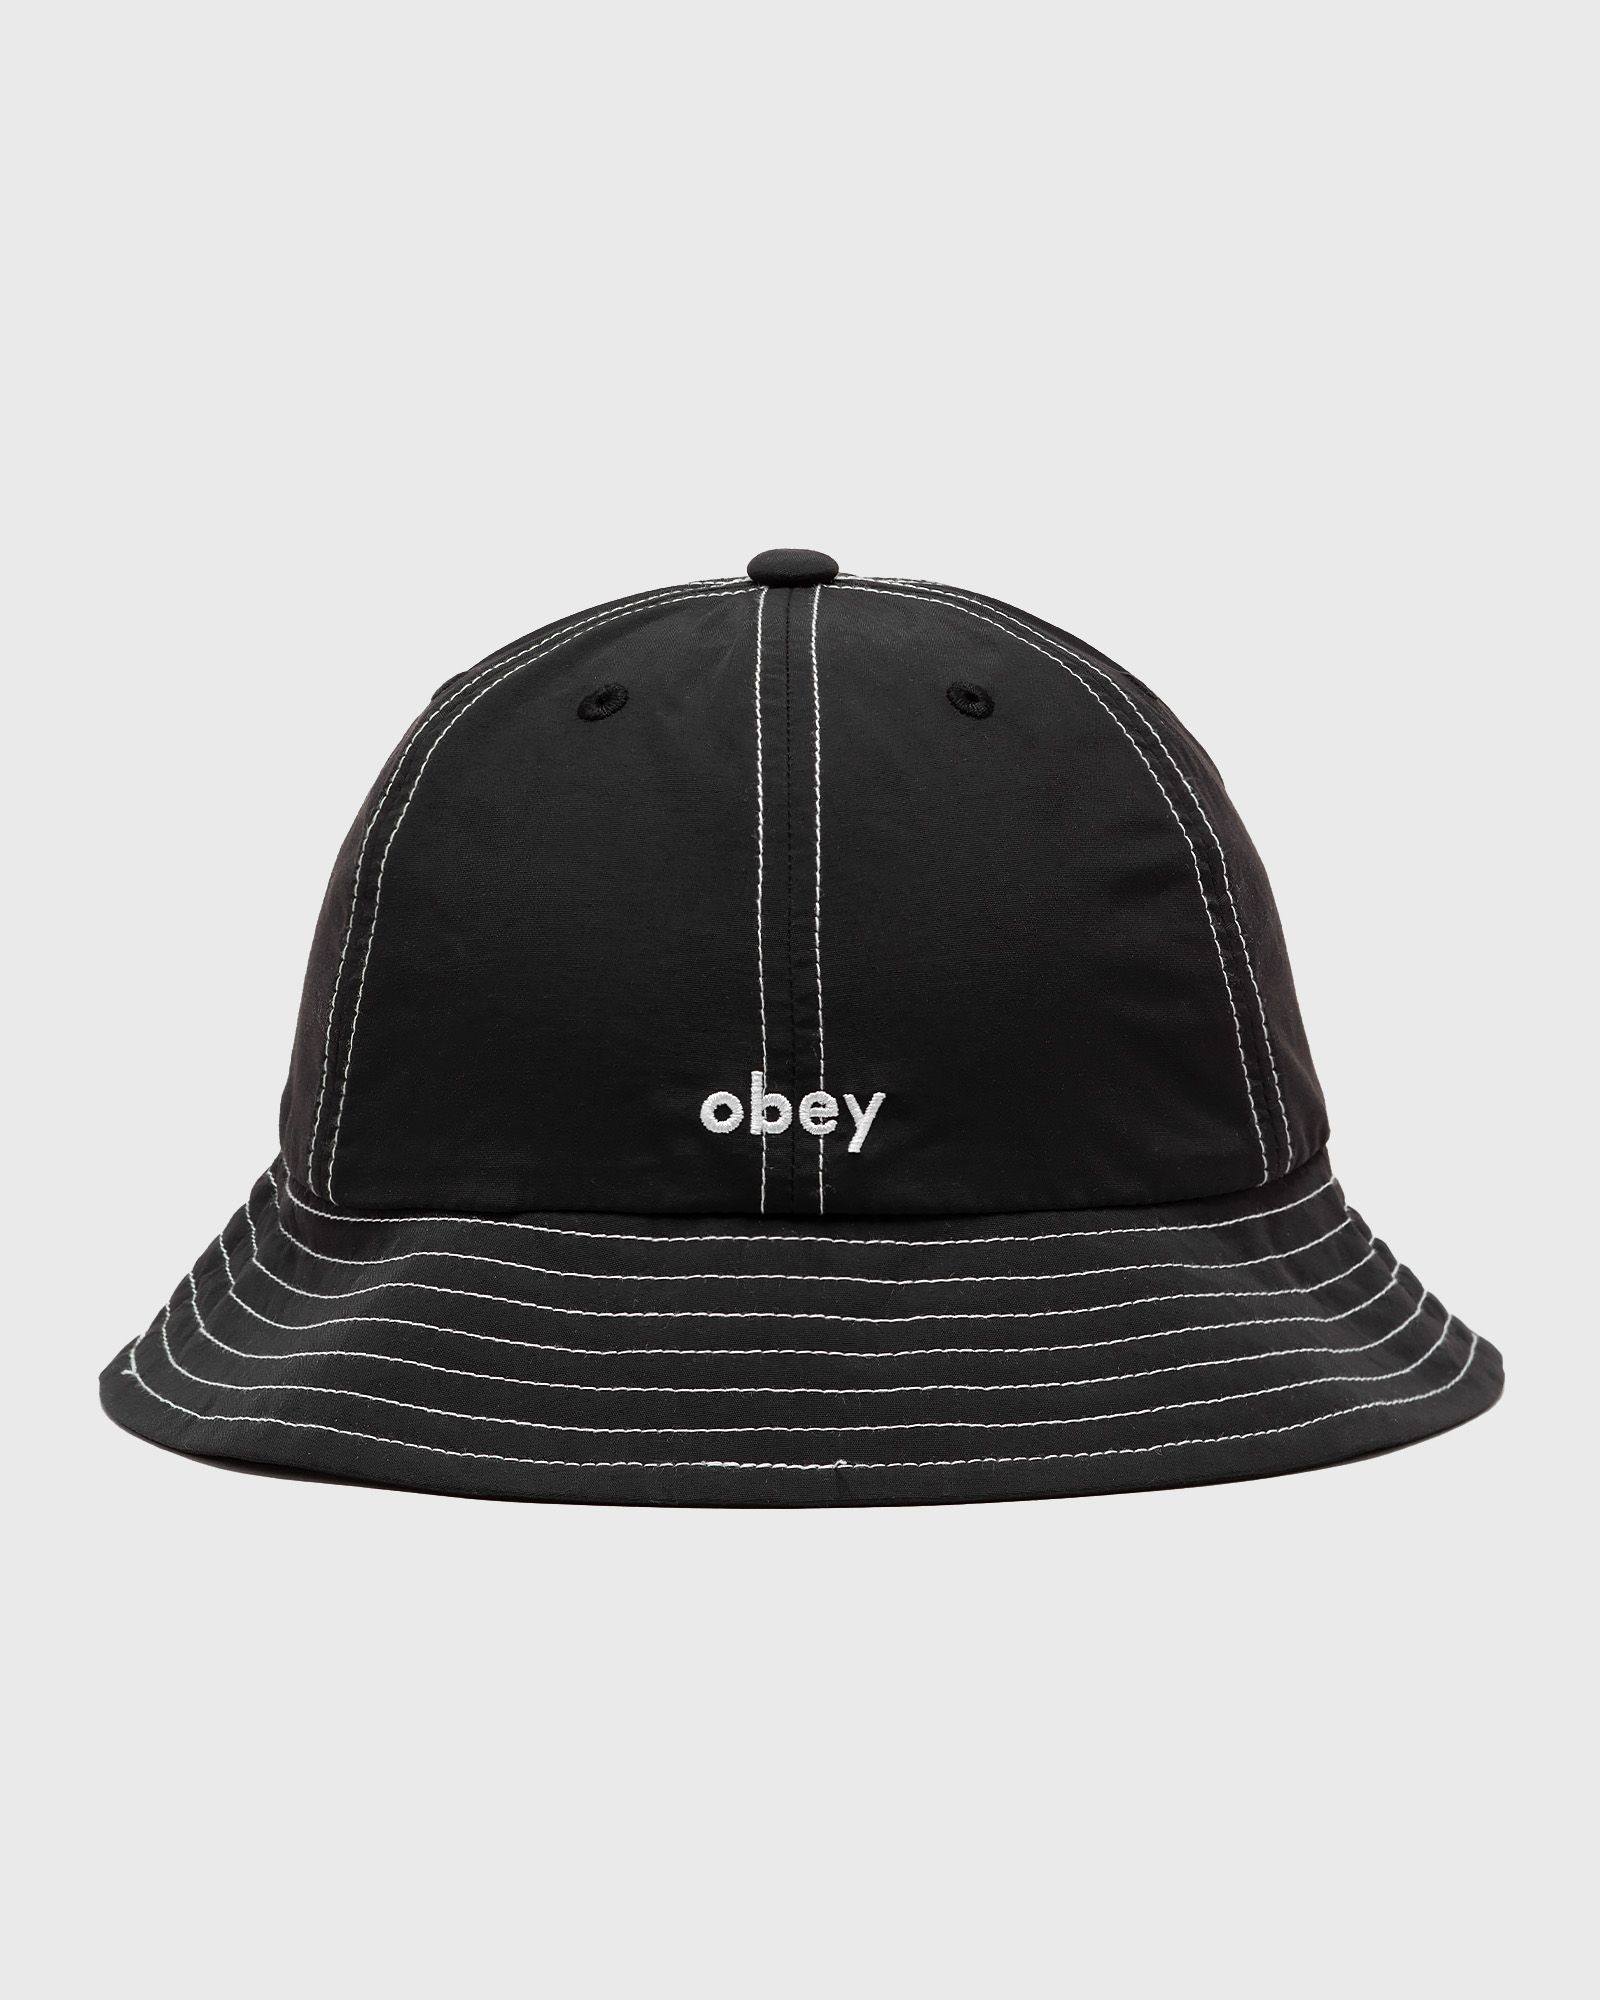 Obey - novio nylon bucket hat men hats black in größe:one size